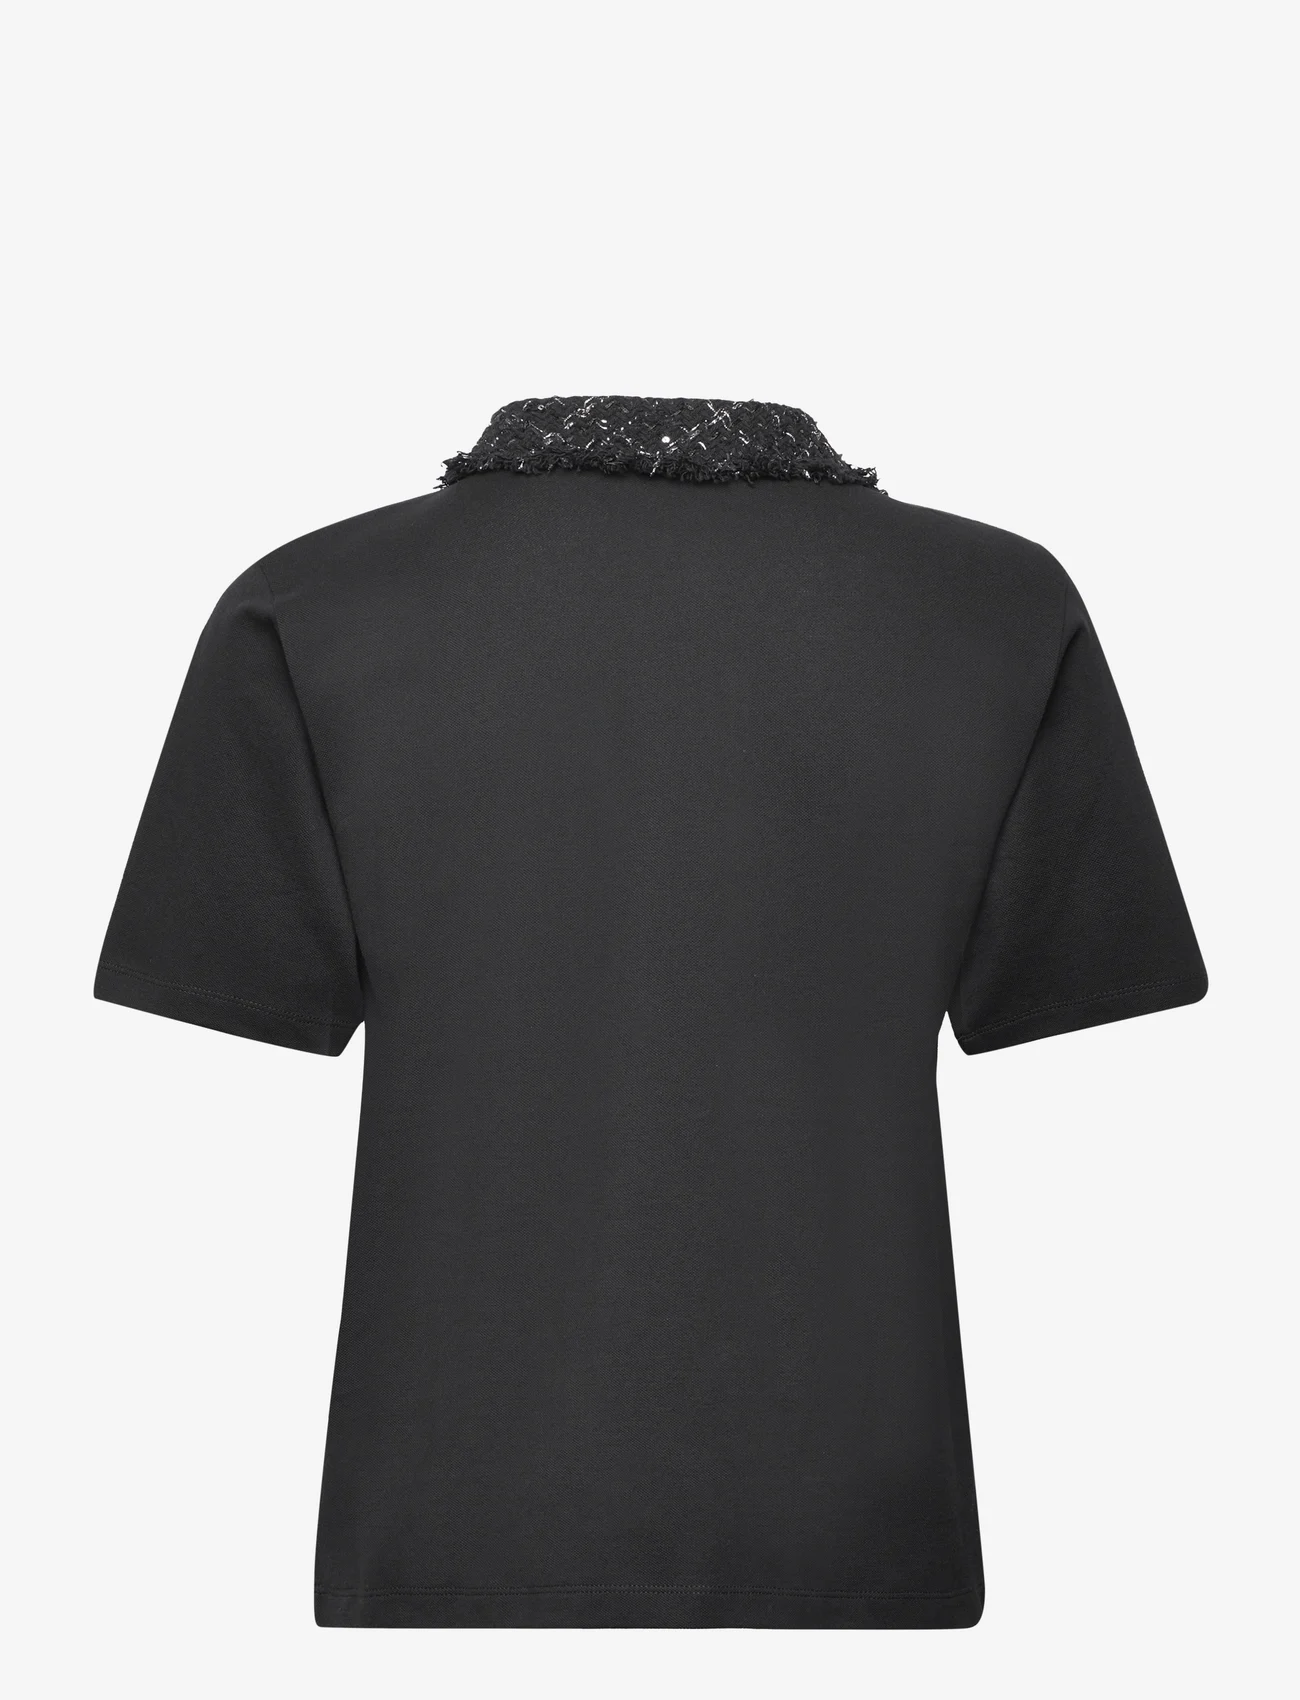 Karl Lagerfeld - boucle polo t-shirt - t-shirts & topper - black - 1